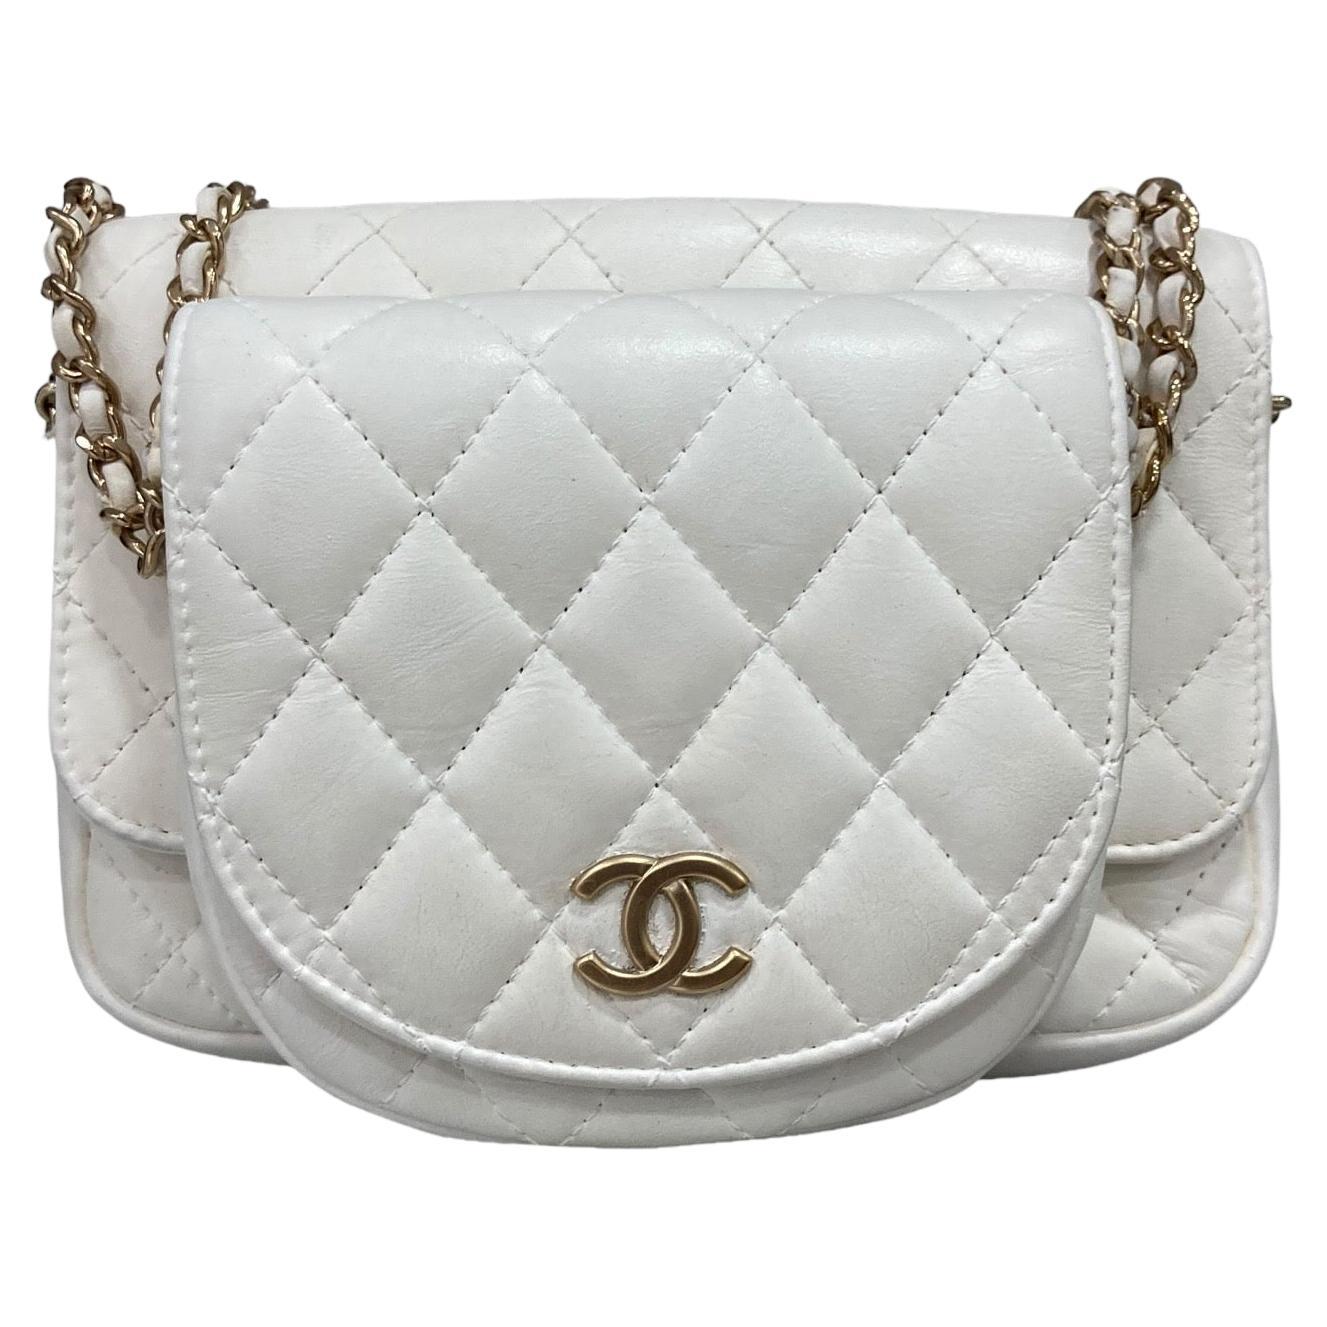 Chanel Double Bags Timeless Bianca Shoulder Bag 2020